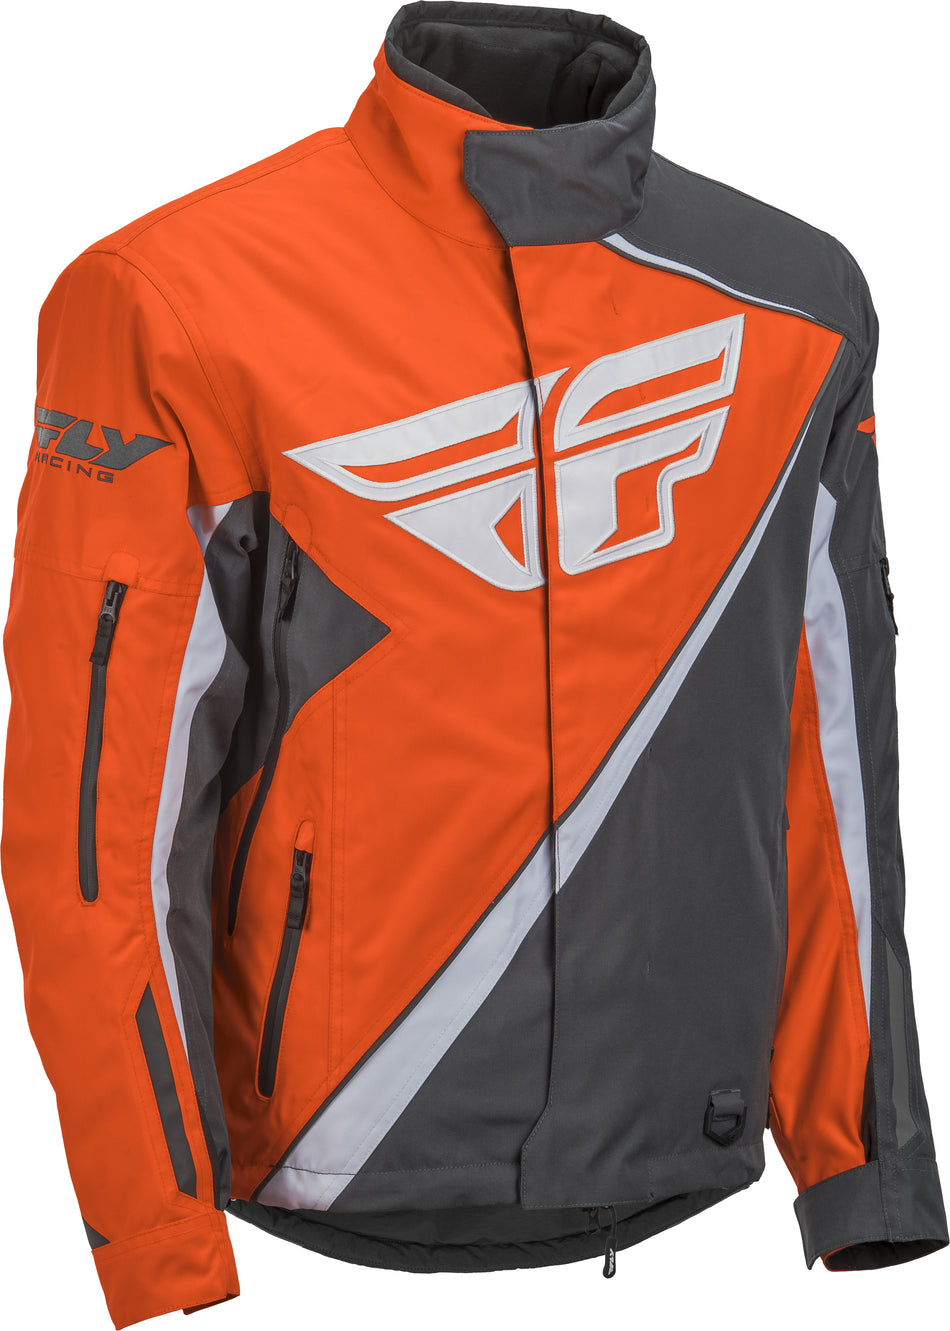 FLY RACING Snx Pro Jacket Orange/Grey Md 470-4088M